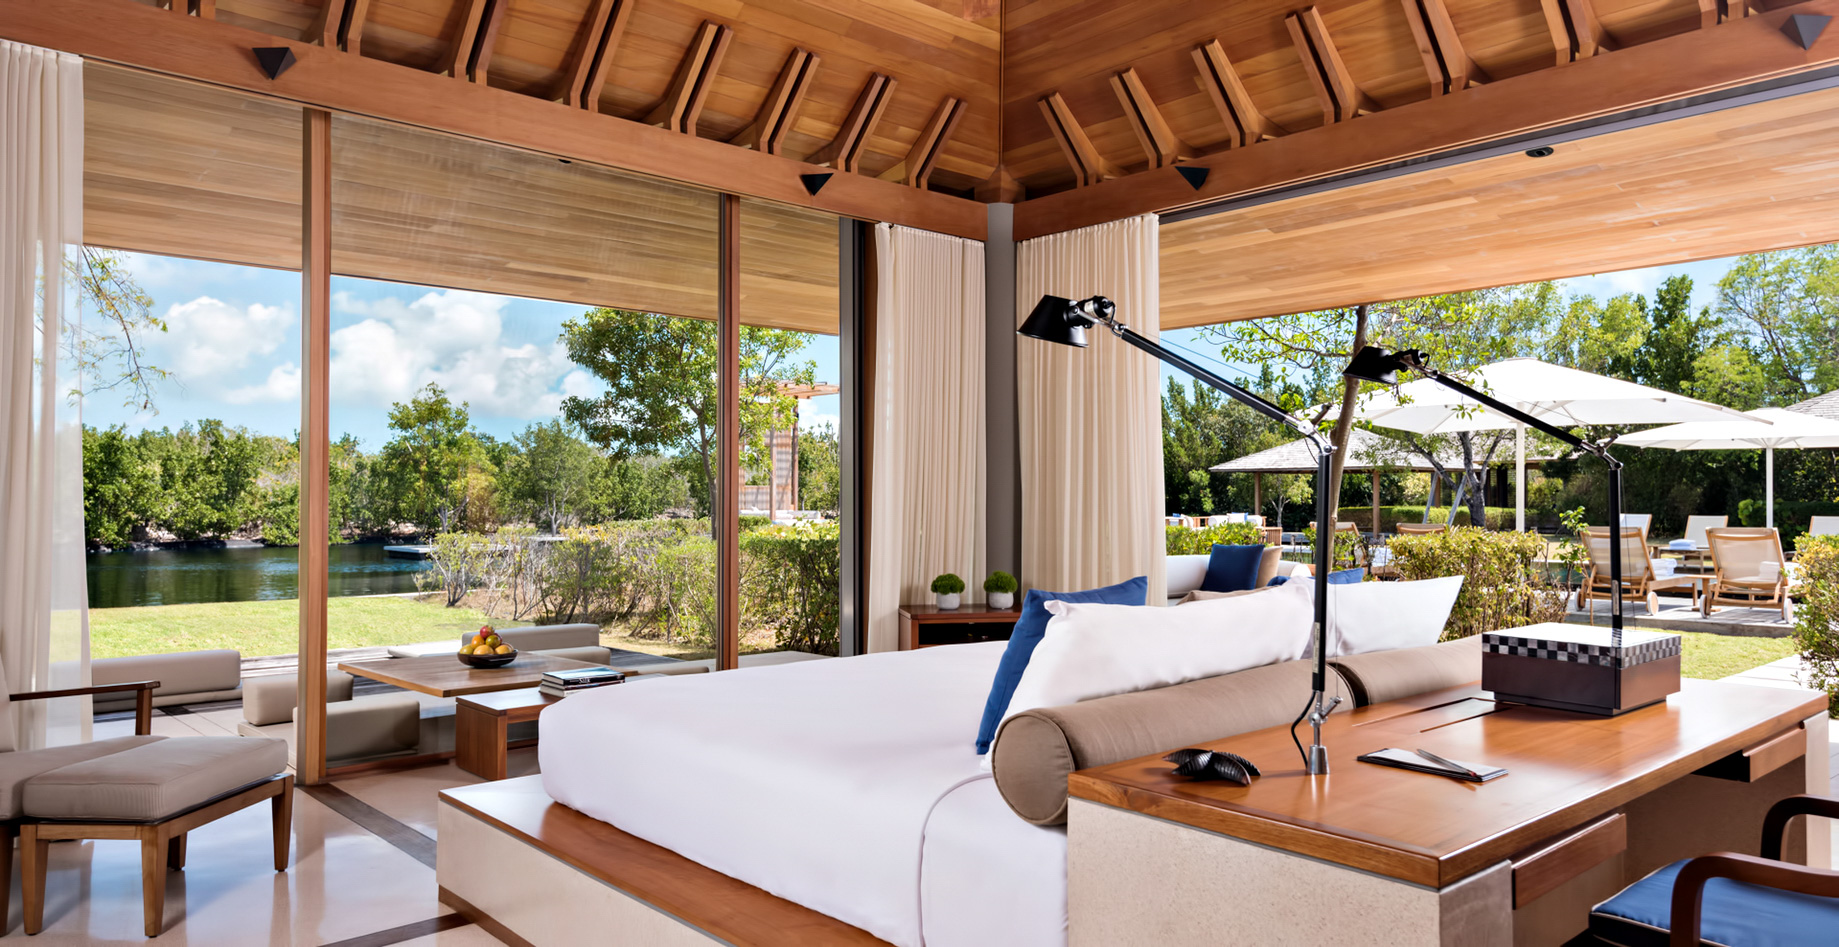 Amanyara Resort – Providenciales, Turks and Caicos Islands – 3 Bedroom Tranquility Villa Bedroom Water View